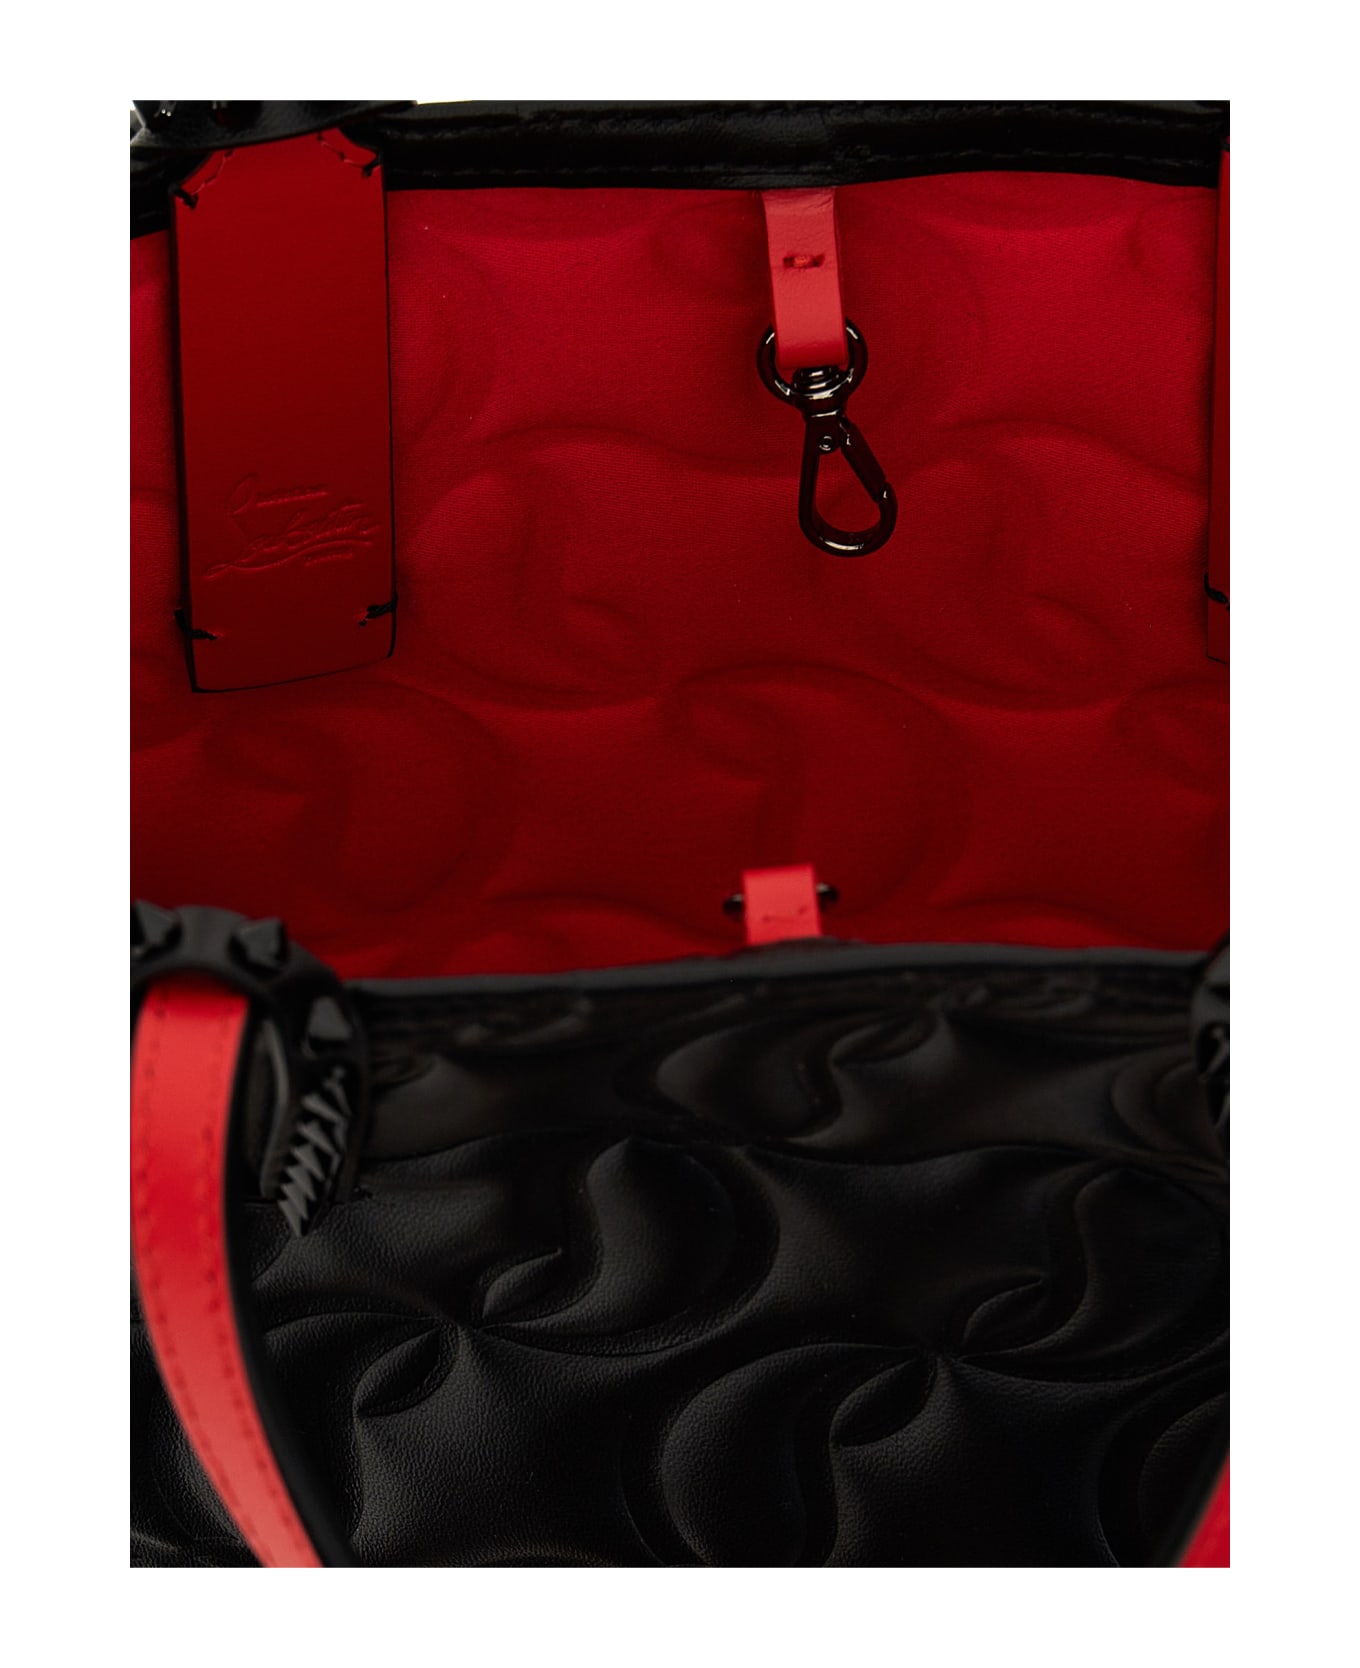 Christian Louboutin 'cabata Mini' Handbag - Black  